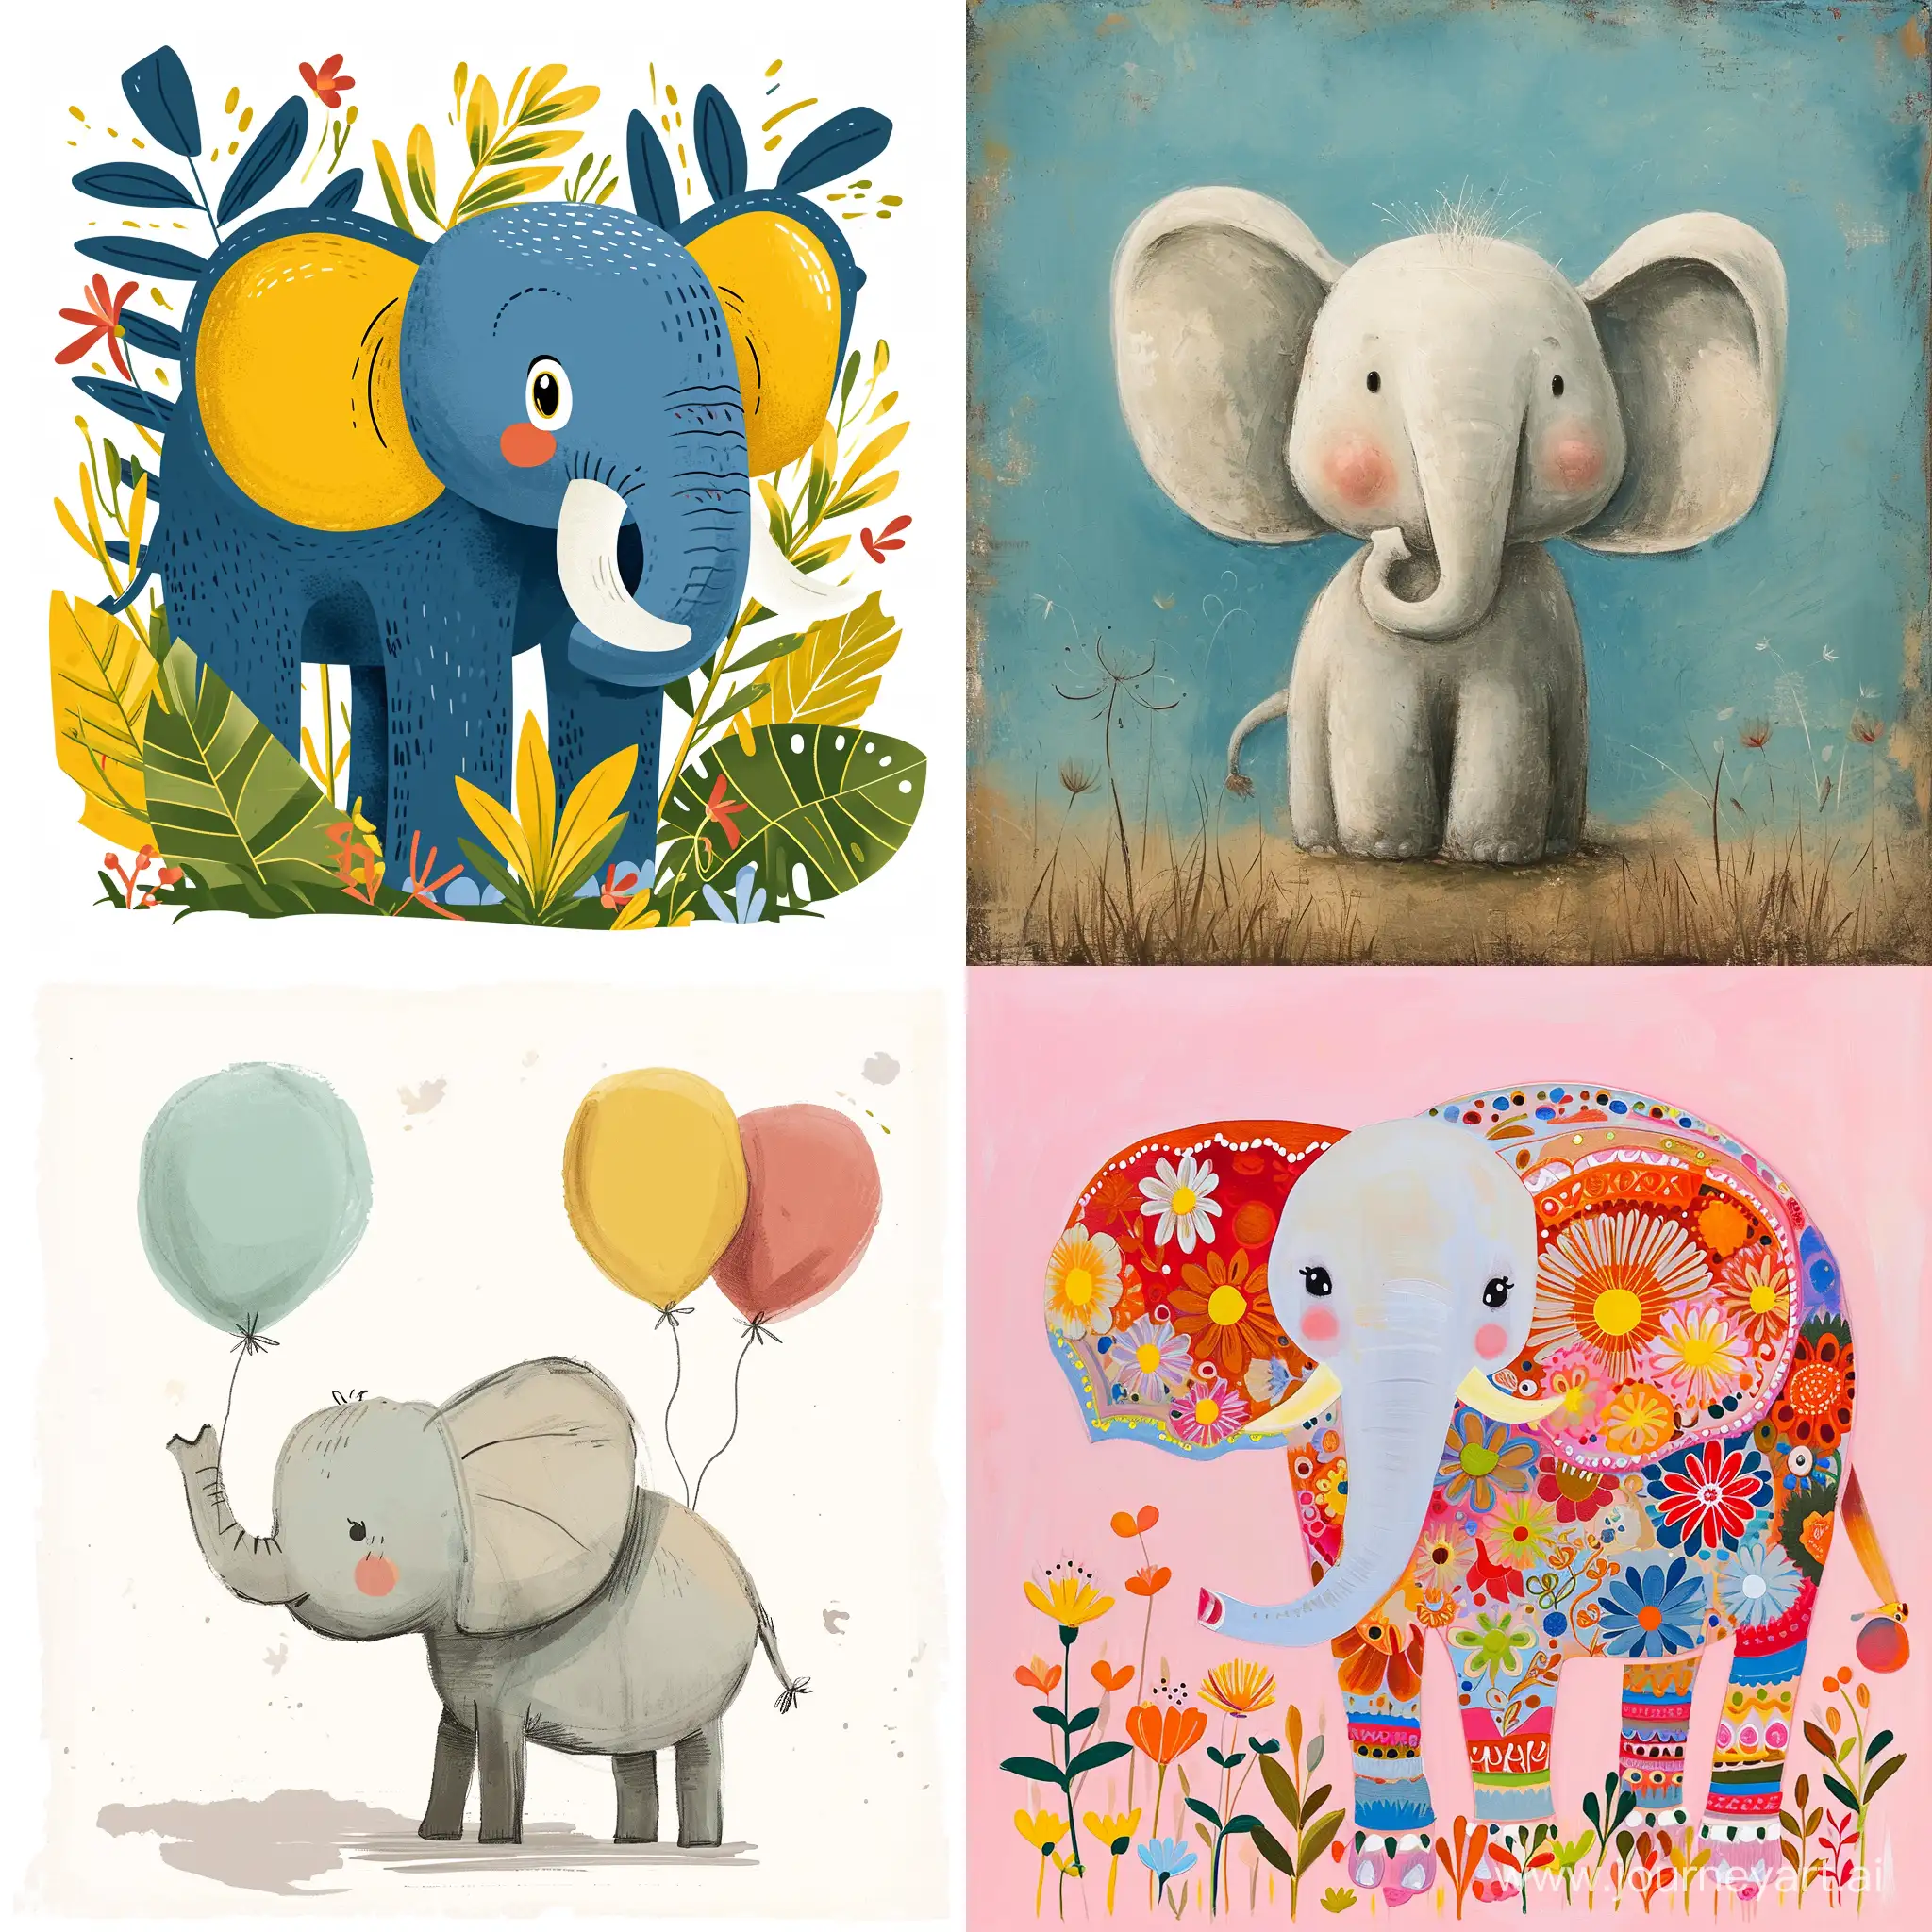 Joyful-Elephant-in-Vibrant-Artistic-Display